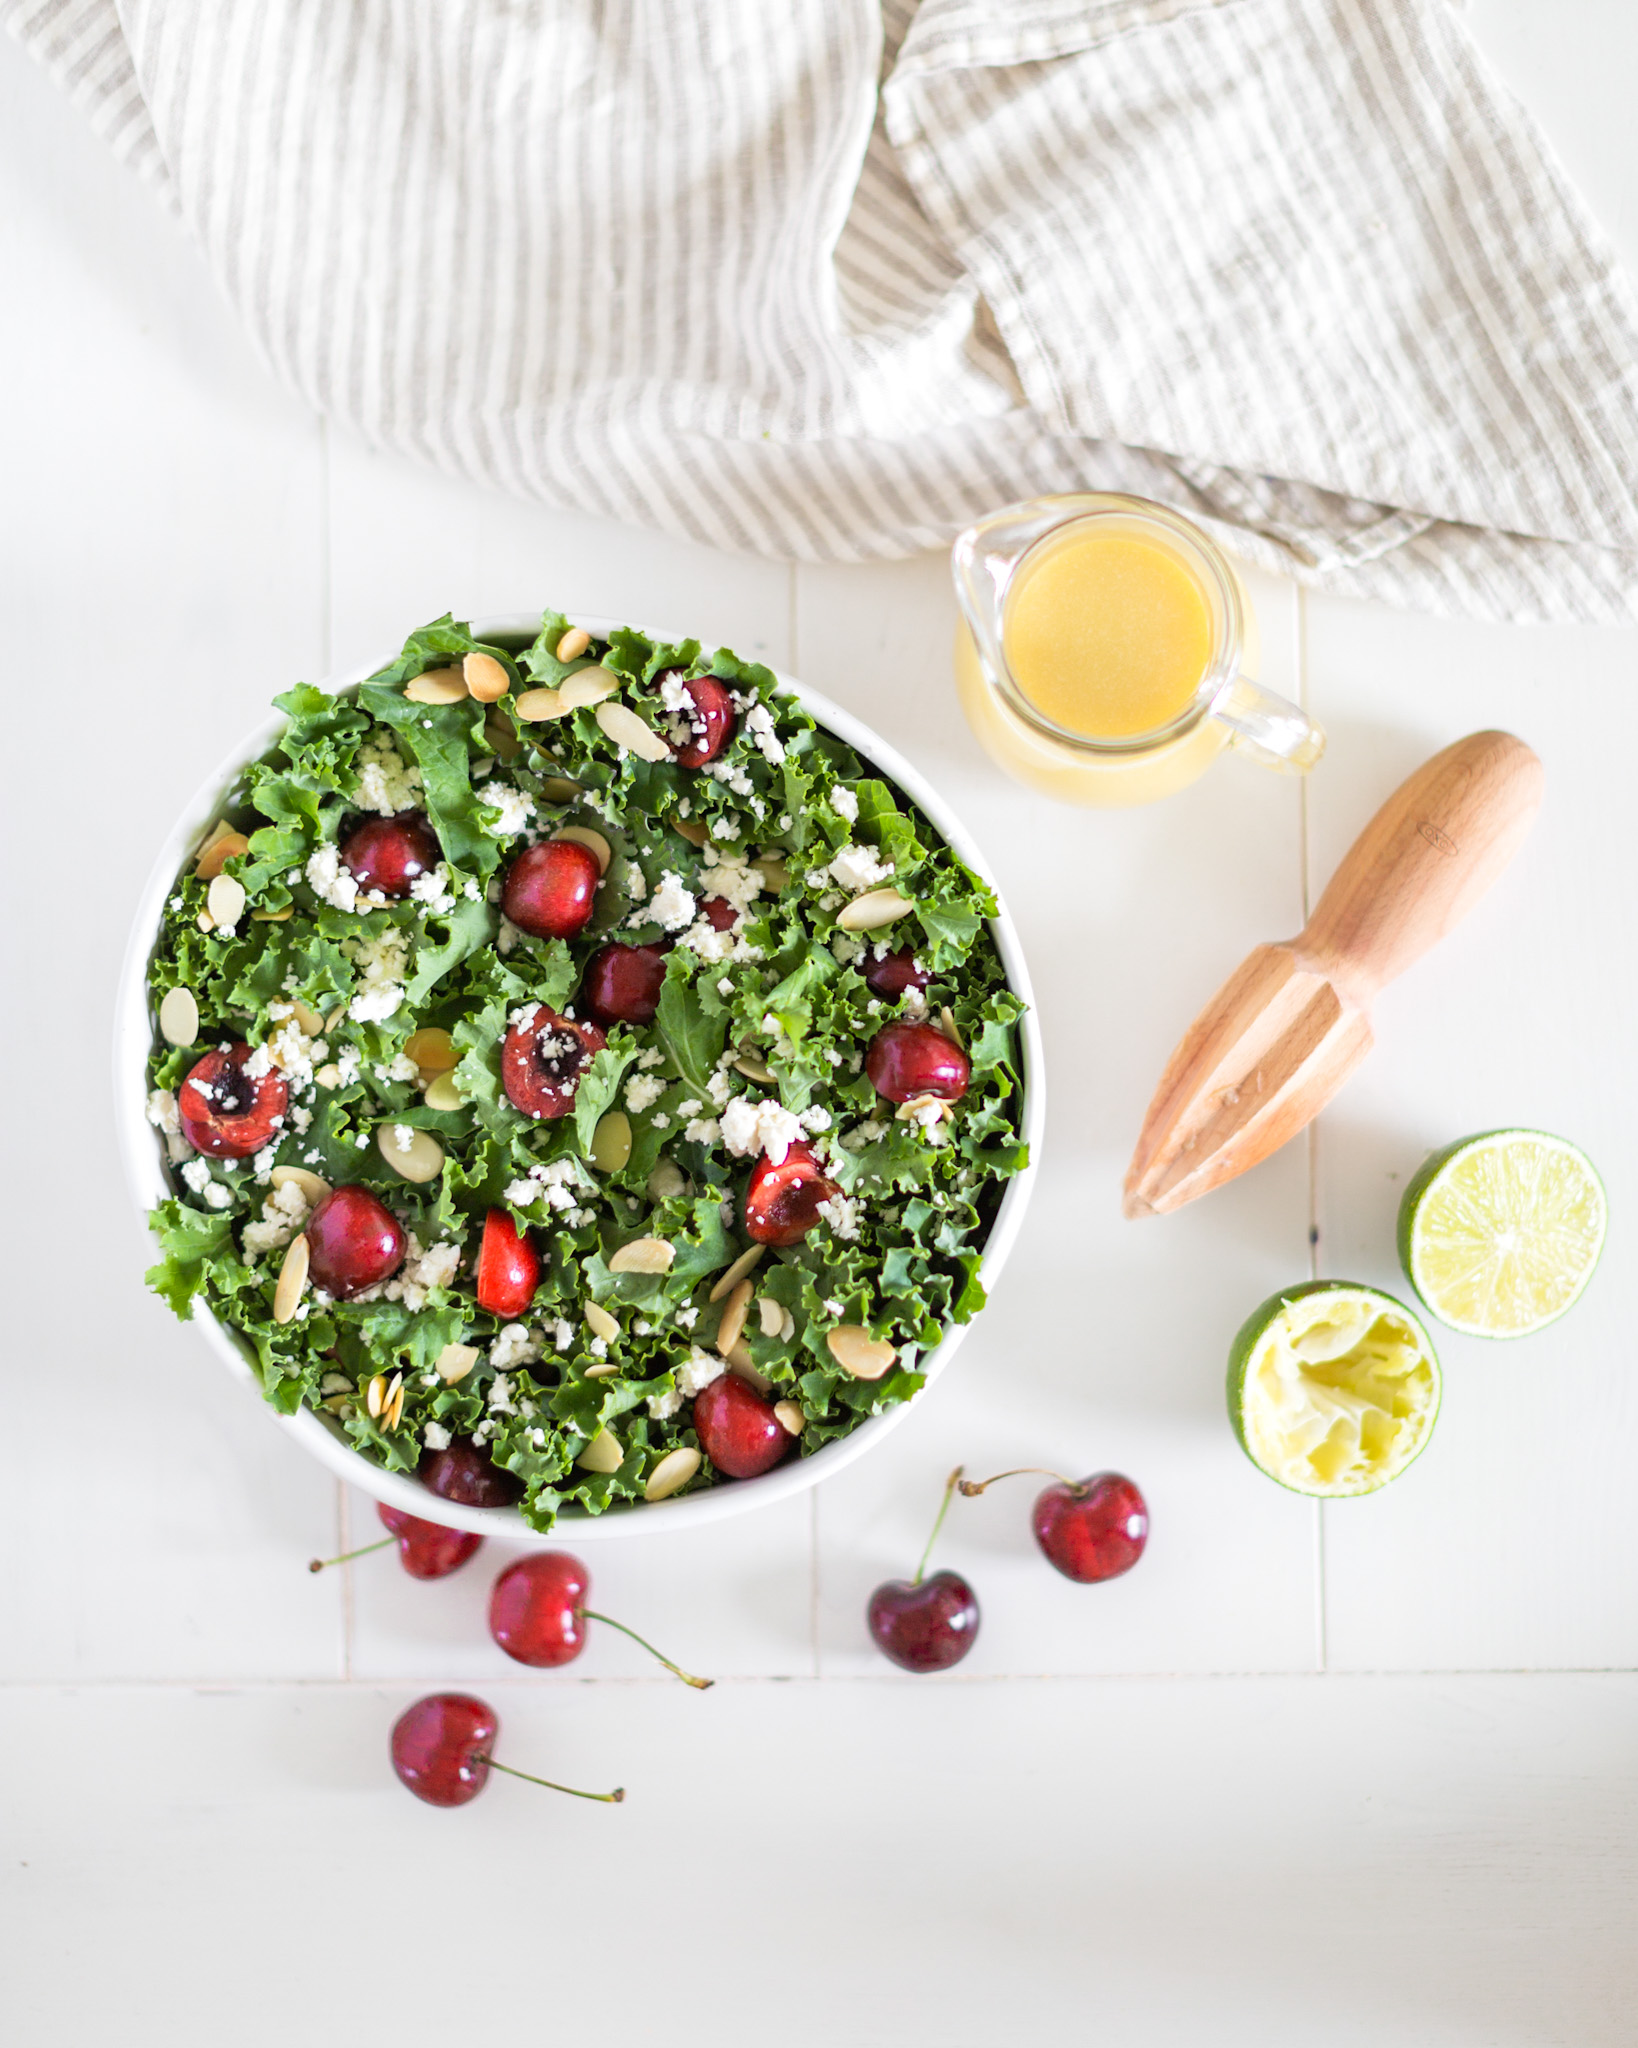 Summer Cherry Kale Salad Recipe with Honey Lime Vinaigrette (Gluten Free & Vegan)